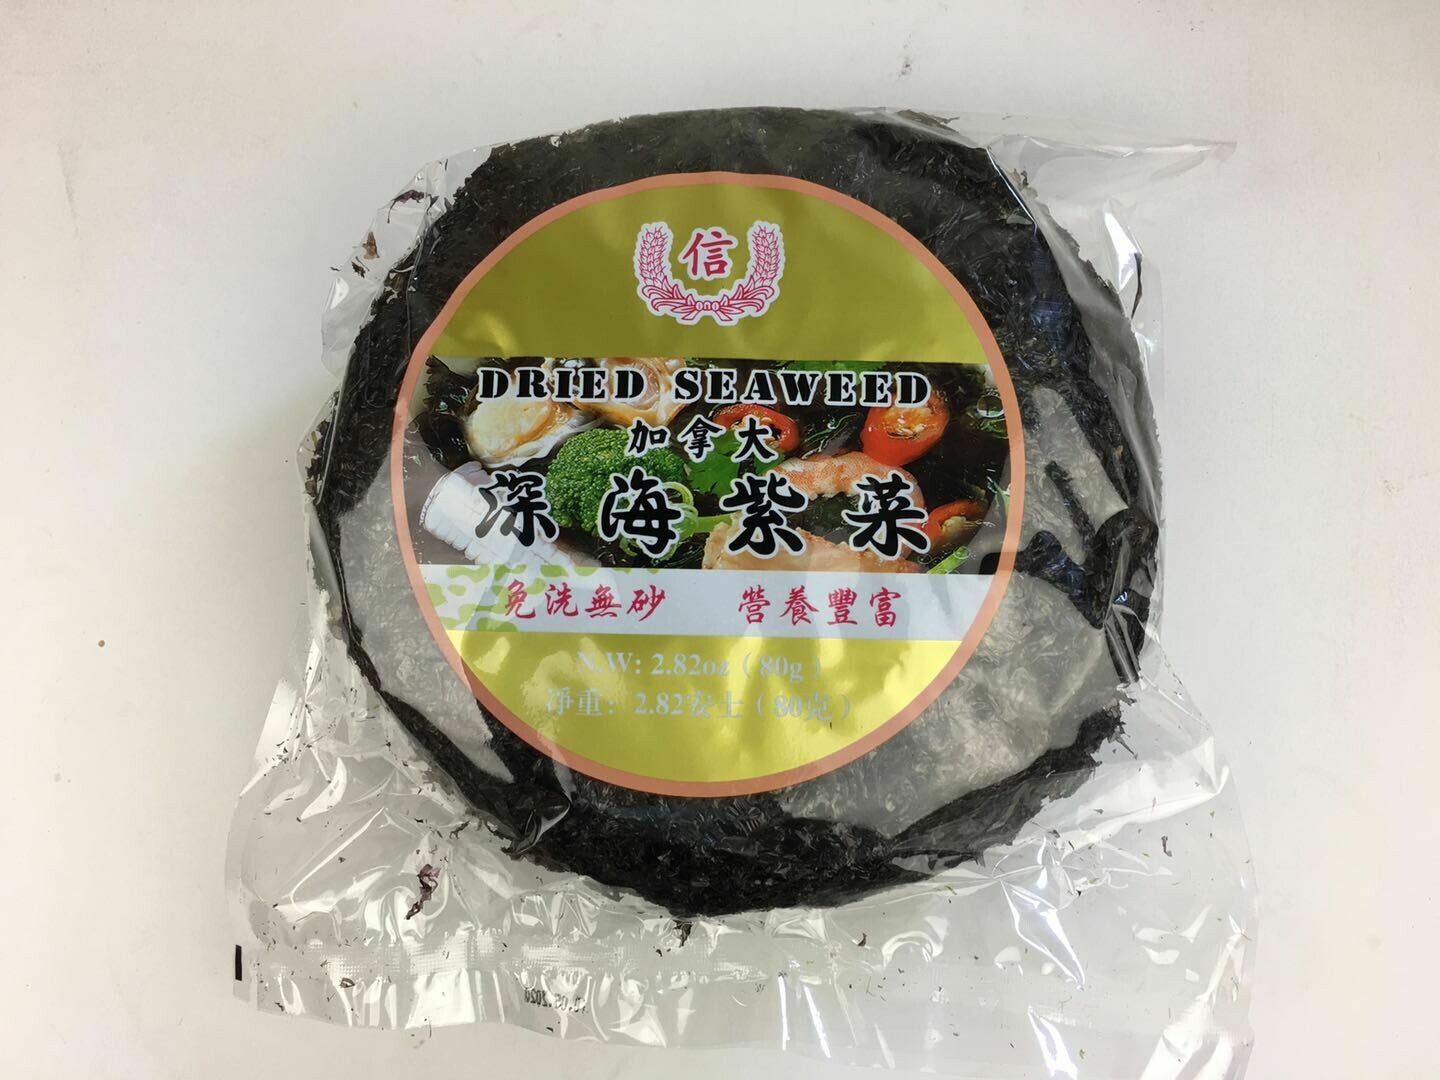 Seaweed Cake 2.82oz 紫菜饼(加拿大)